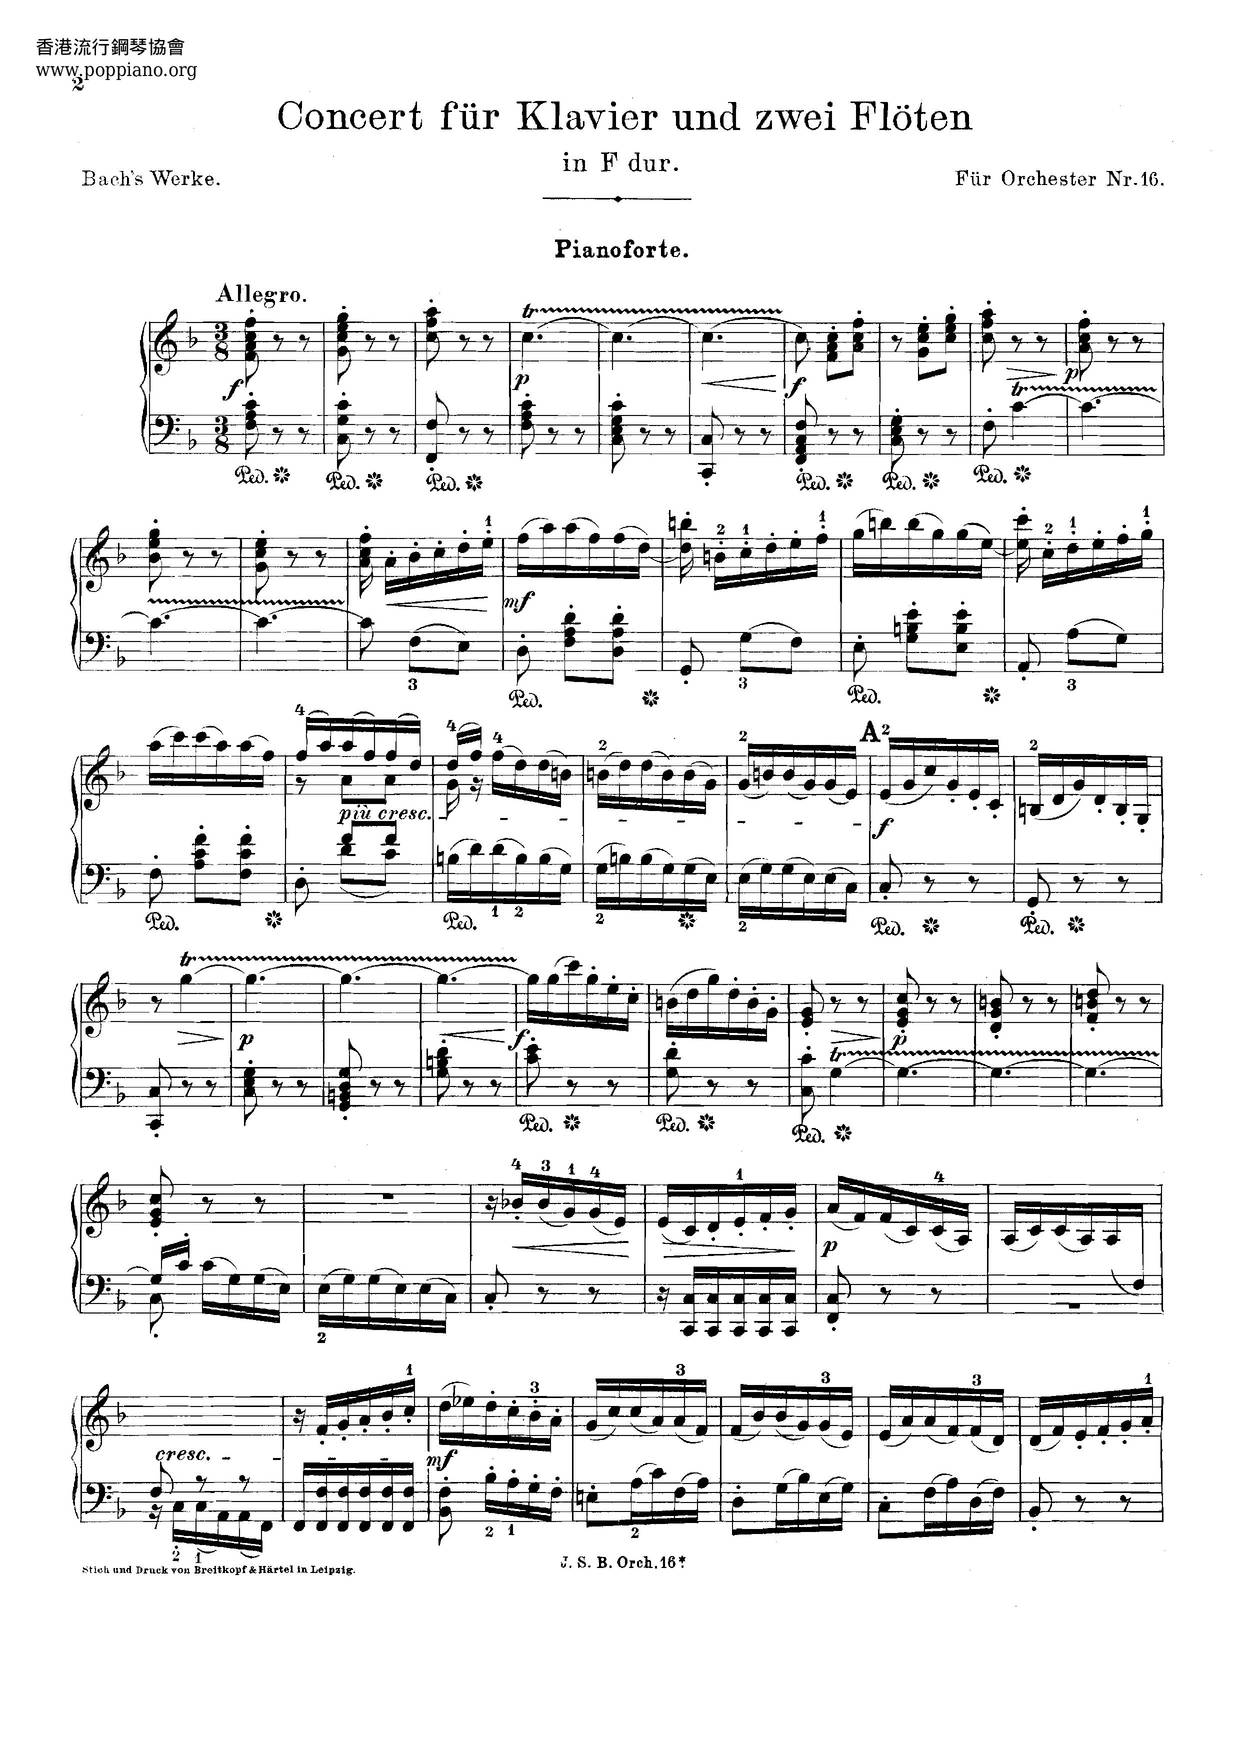 Harpsichord Concerto No. 6 In F Major, BWV 1057 Score